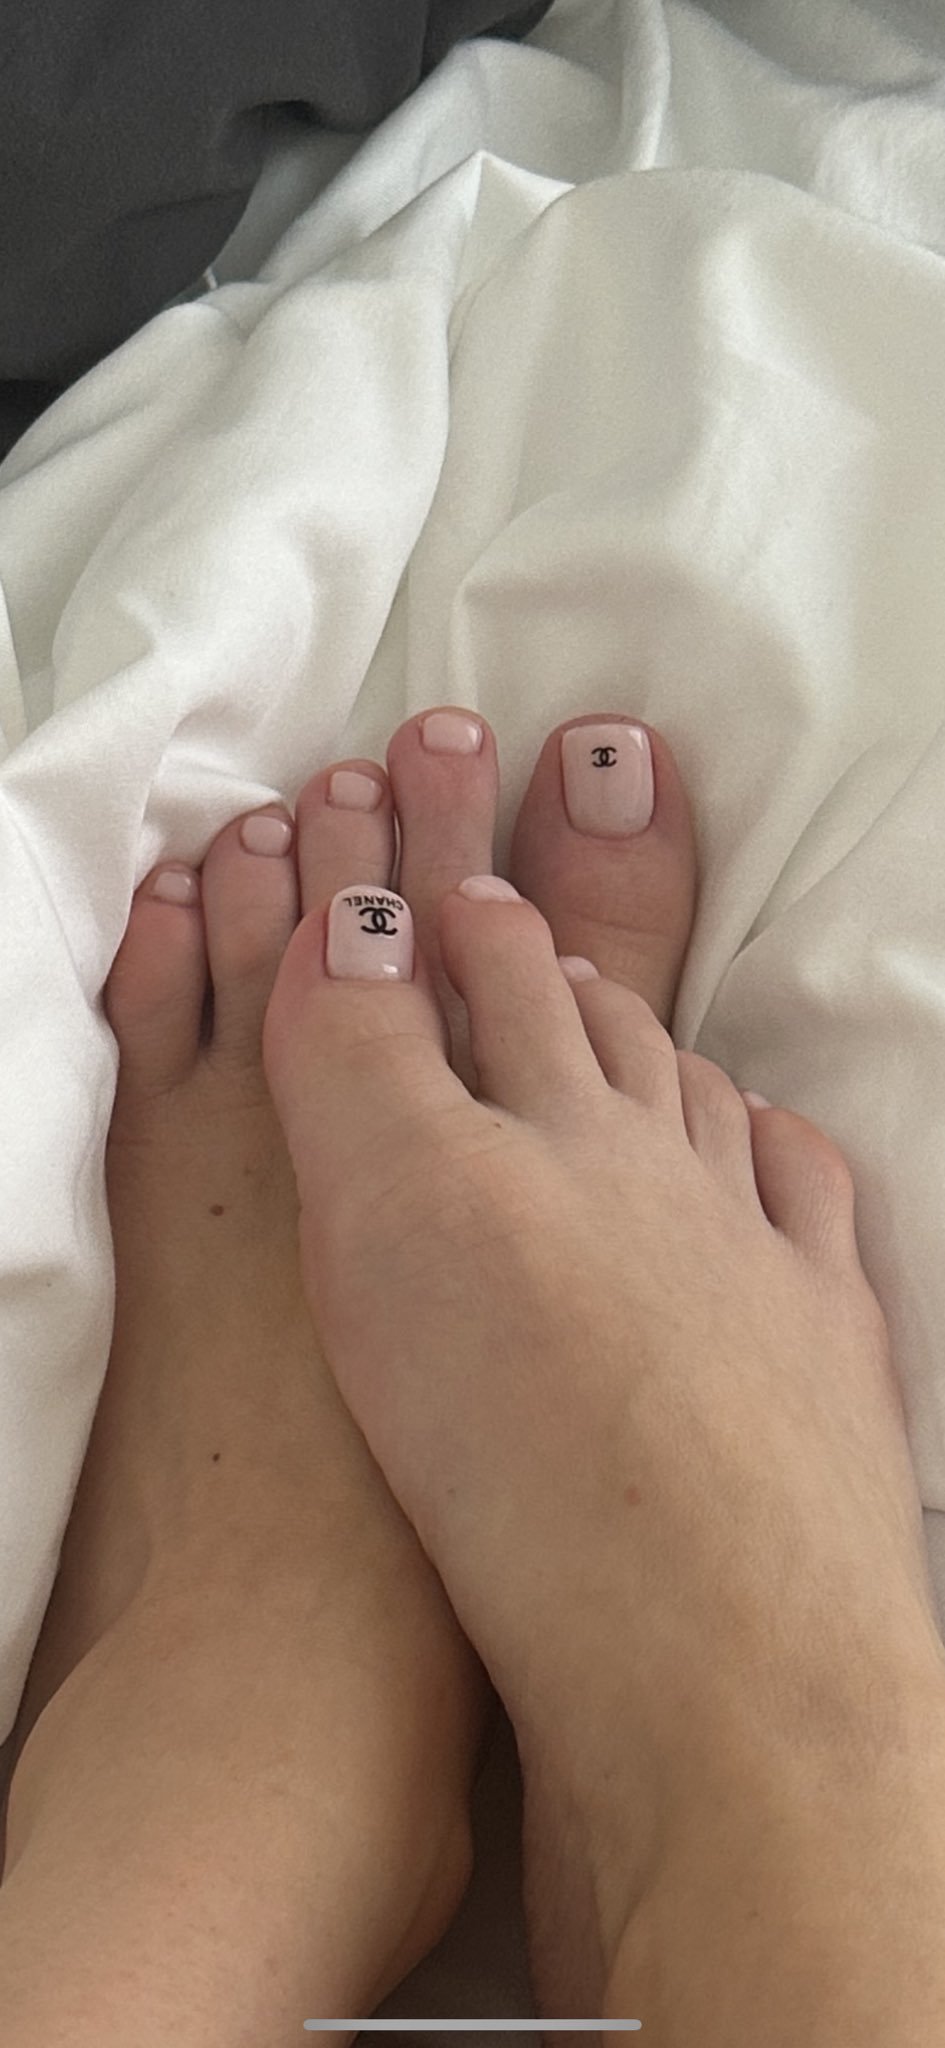 Alexandra Qos Feet